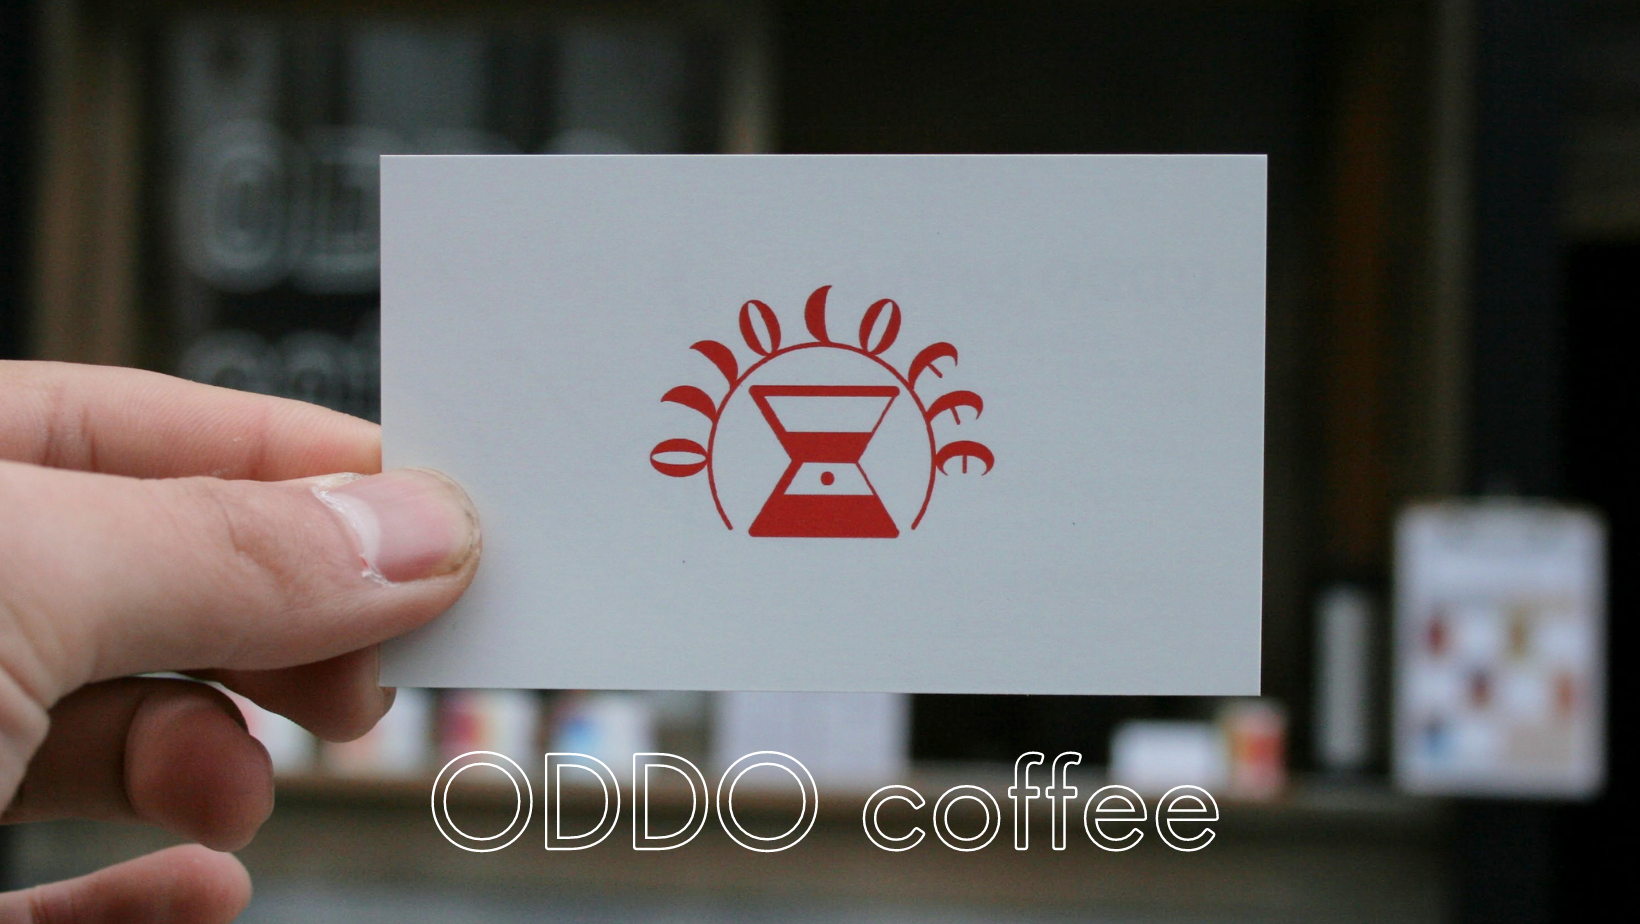 ODDO coffee